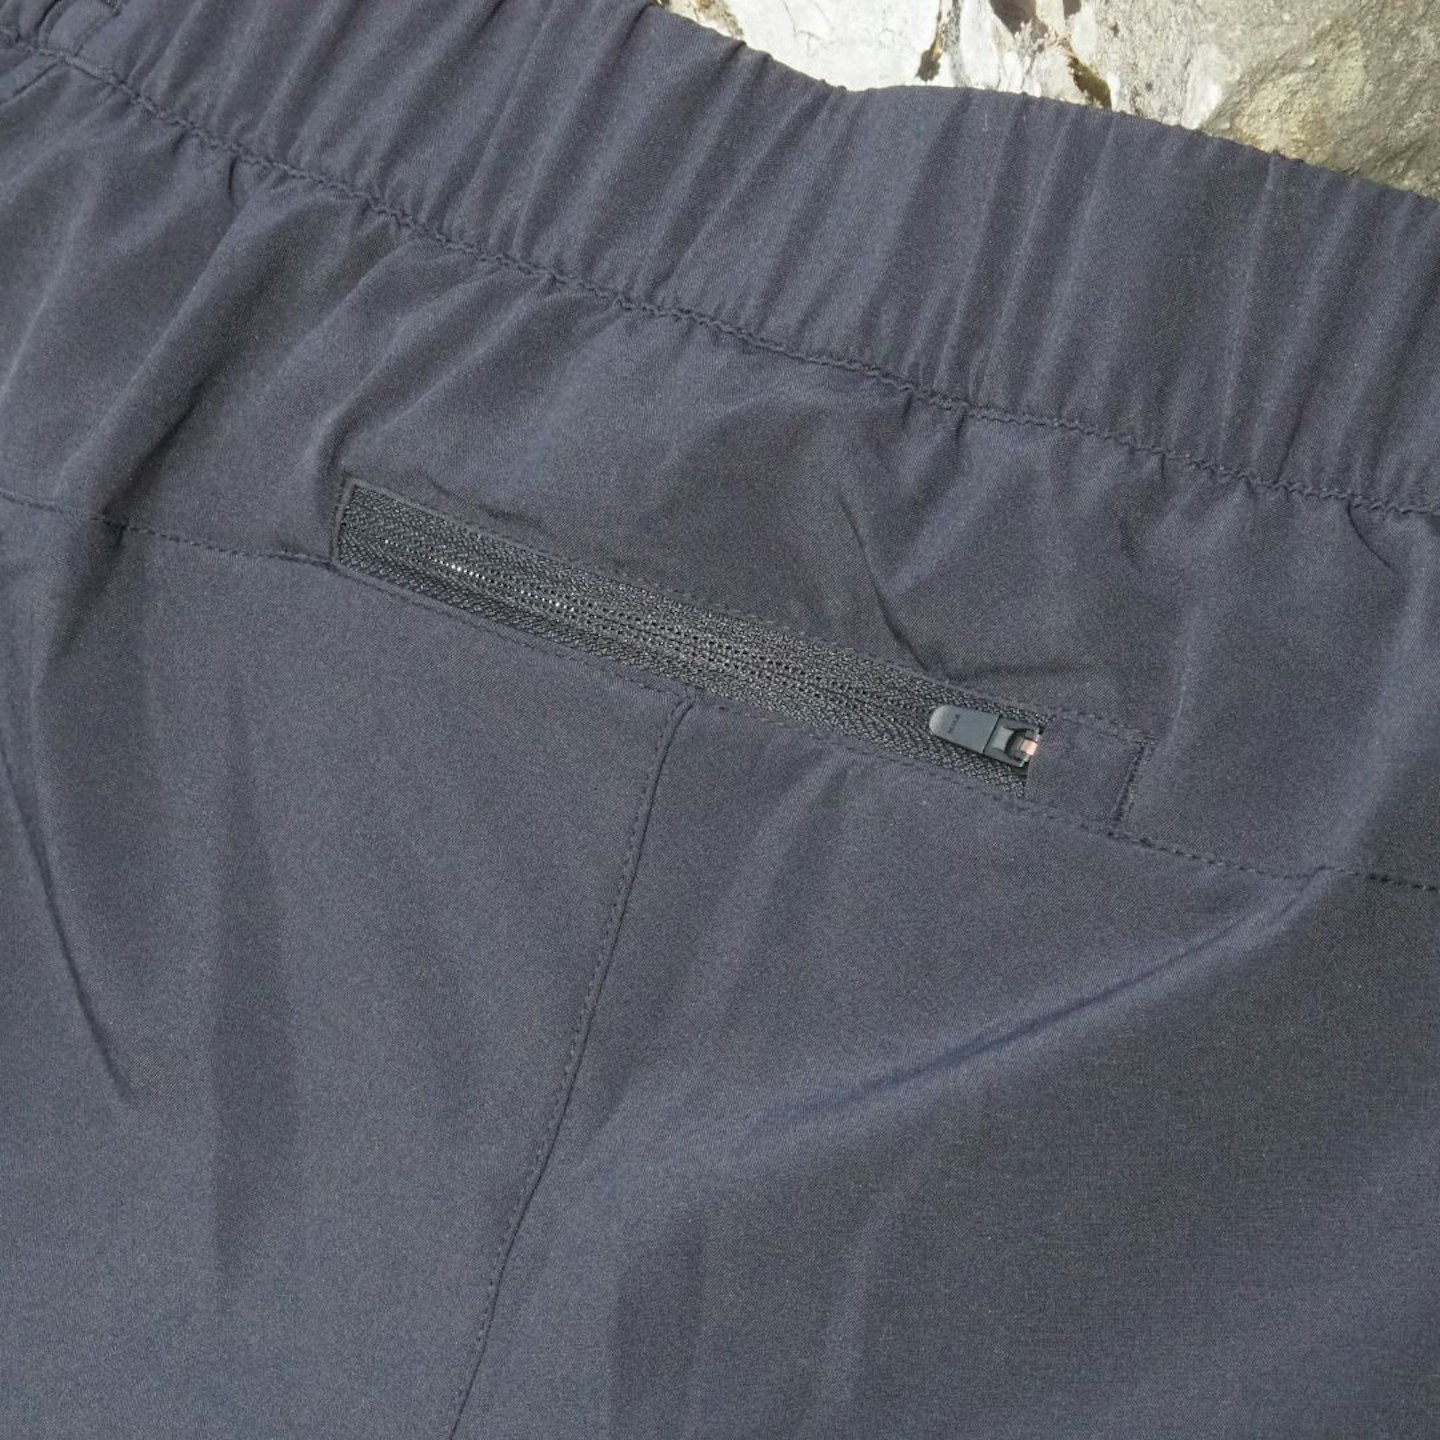 Smartwool Active Lined Short rear pocket